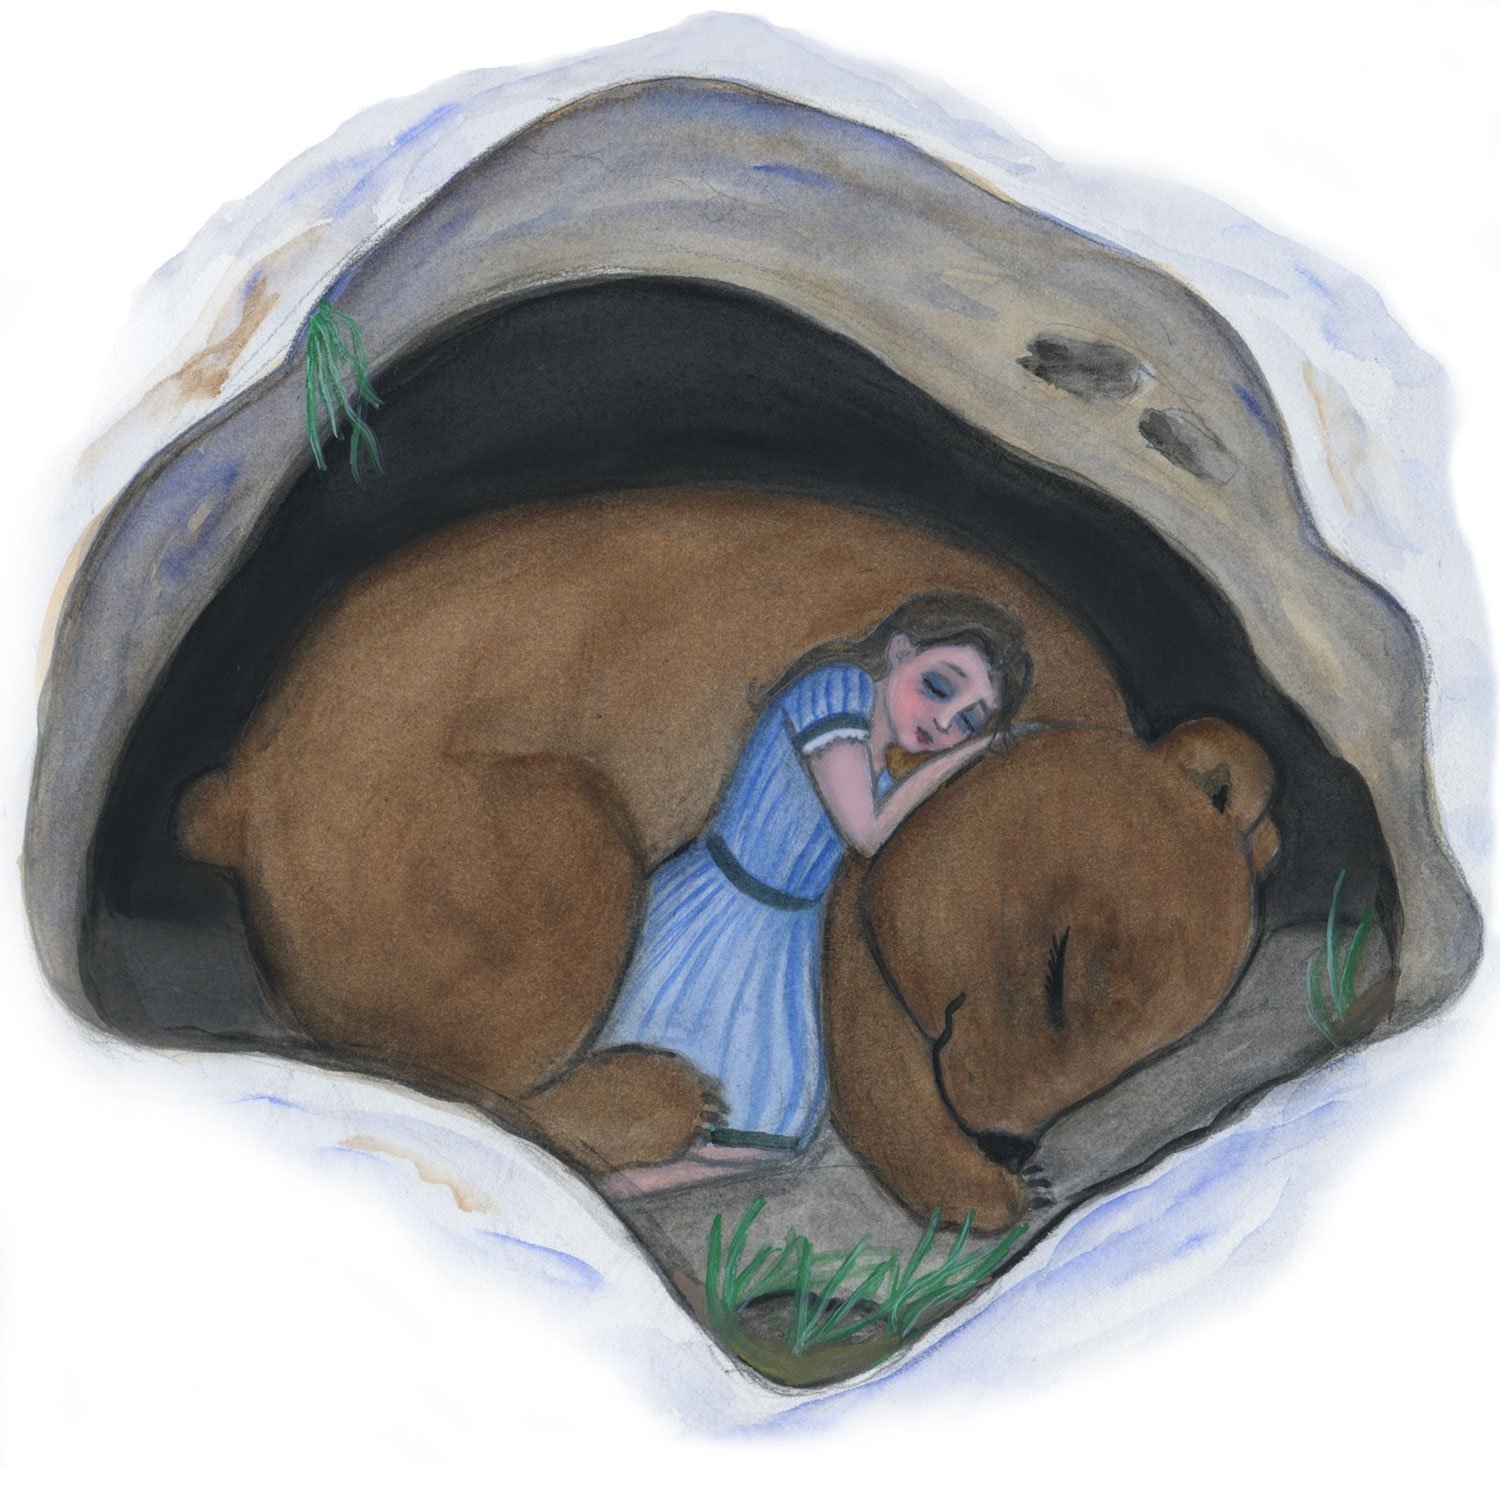 Яой спячка. Берлога медведя. Медведь в берлоге. Медведь в спячке в берлоге. Медвежья Берлога Берлога медведя. Берлогемедведьв берлоге.